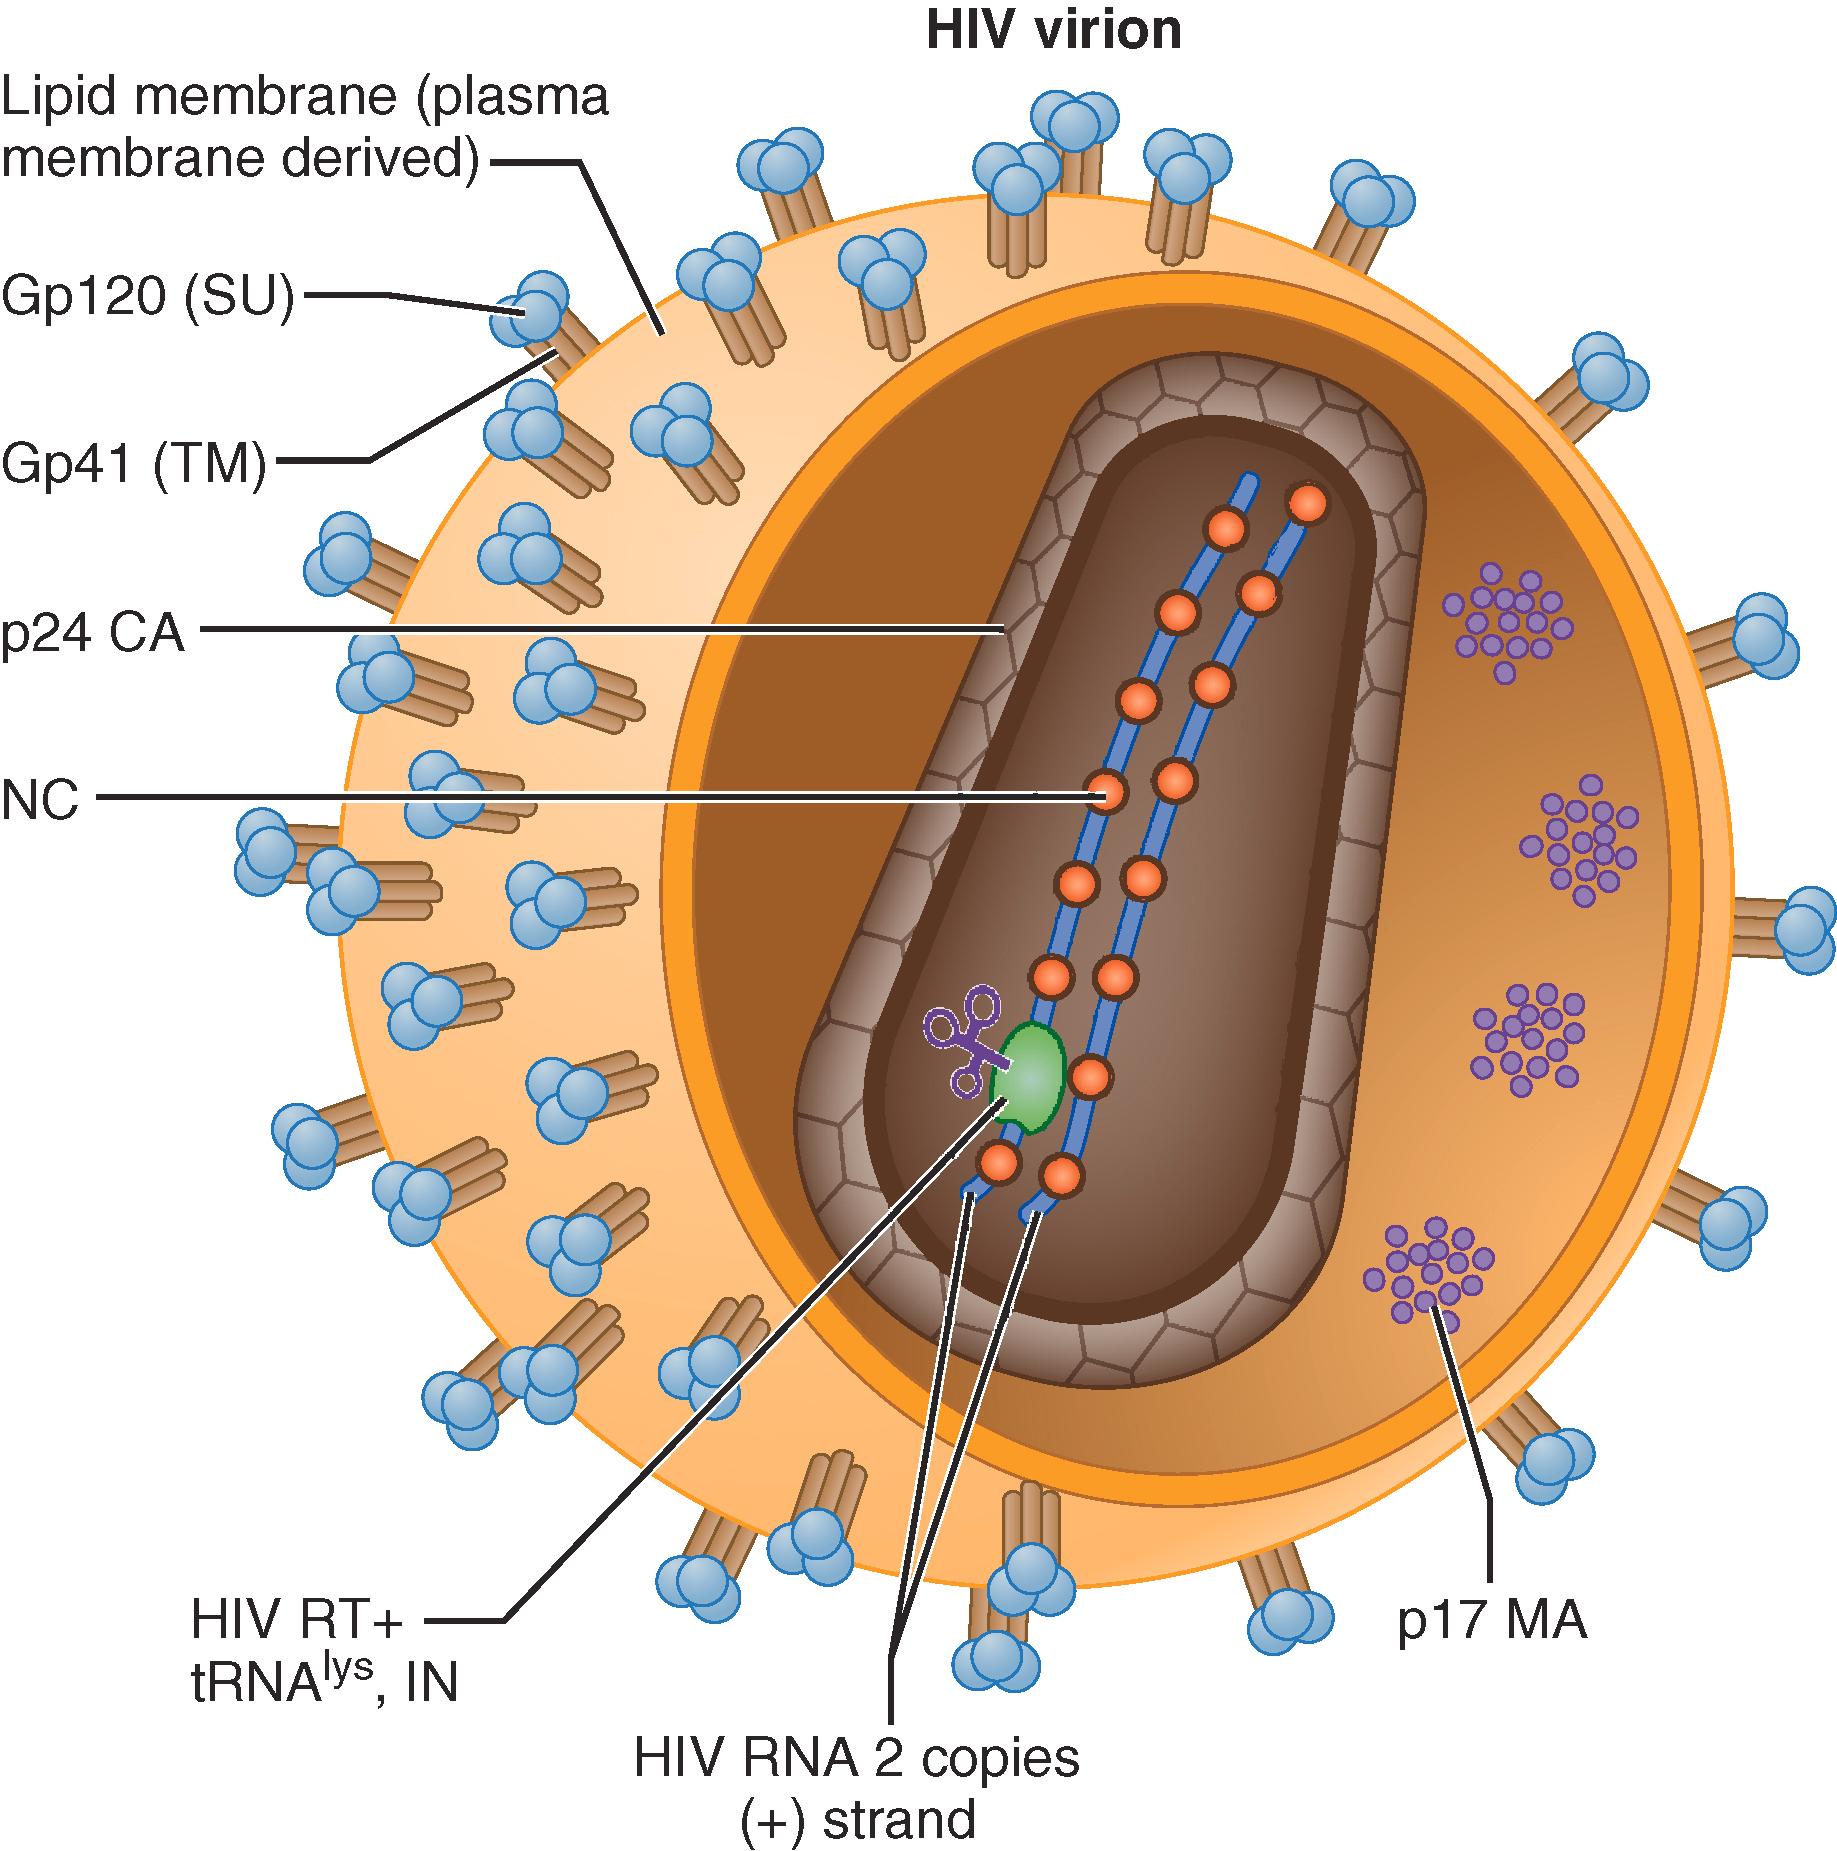 FIGURE 354-1, The HIV virion.